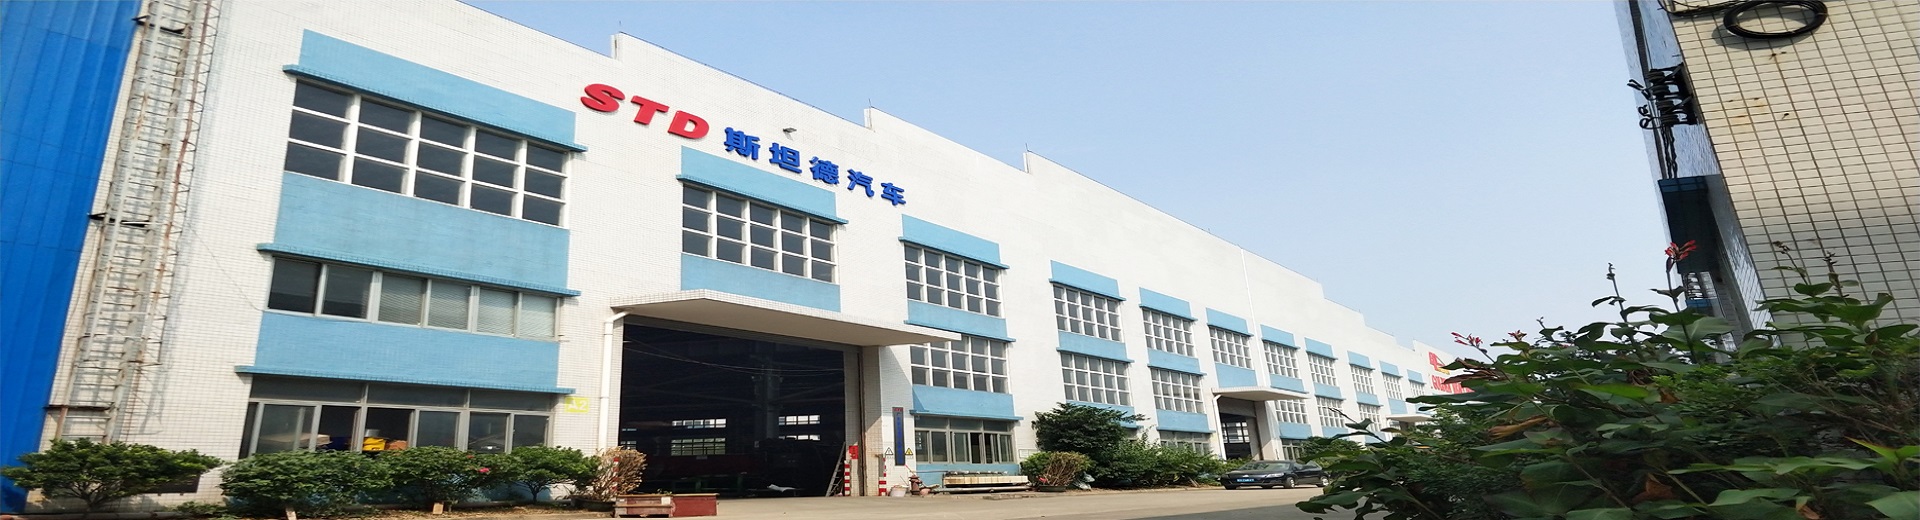 Shenzhen Standard Automobile Co., Ltd